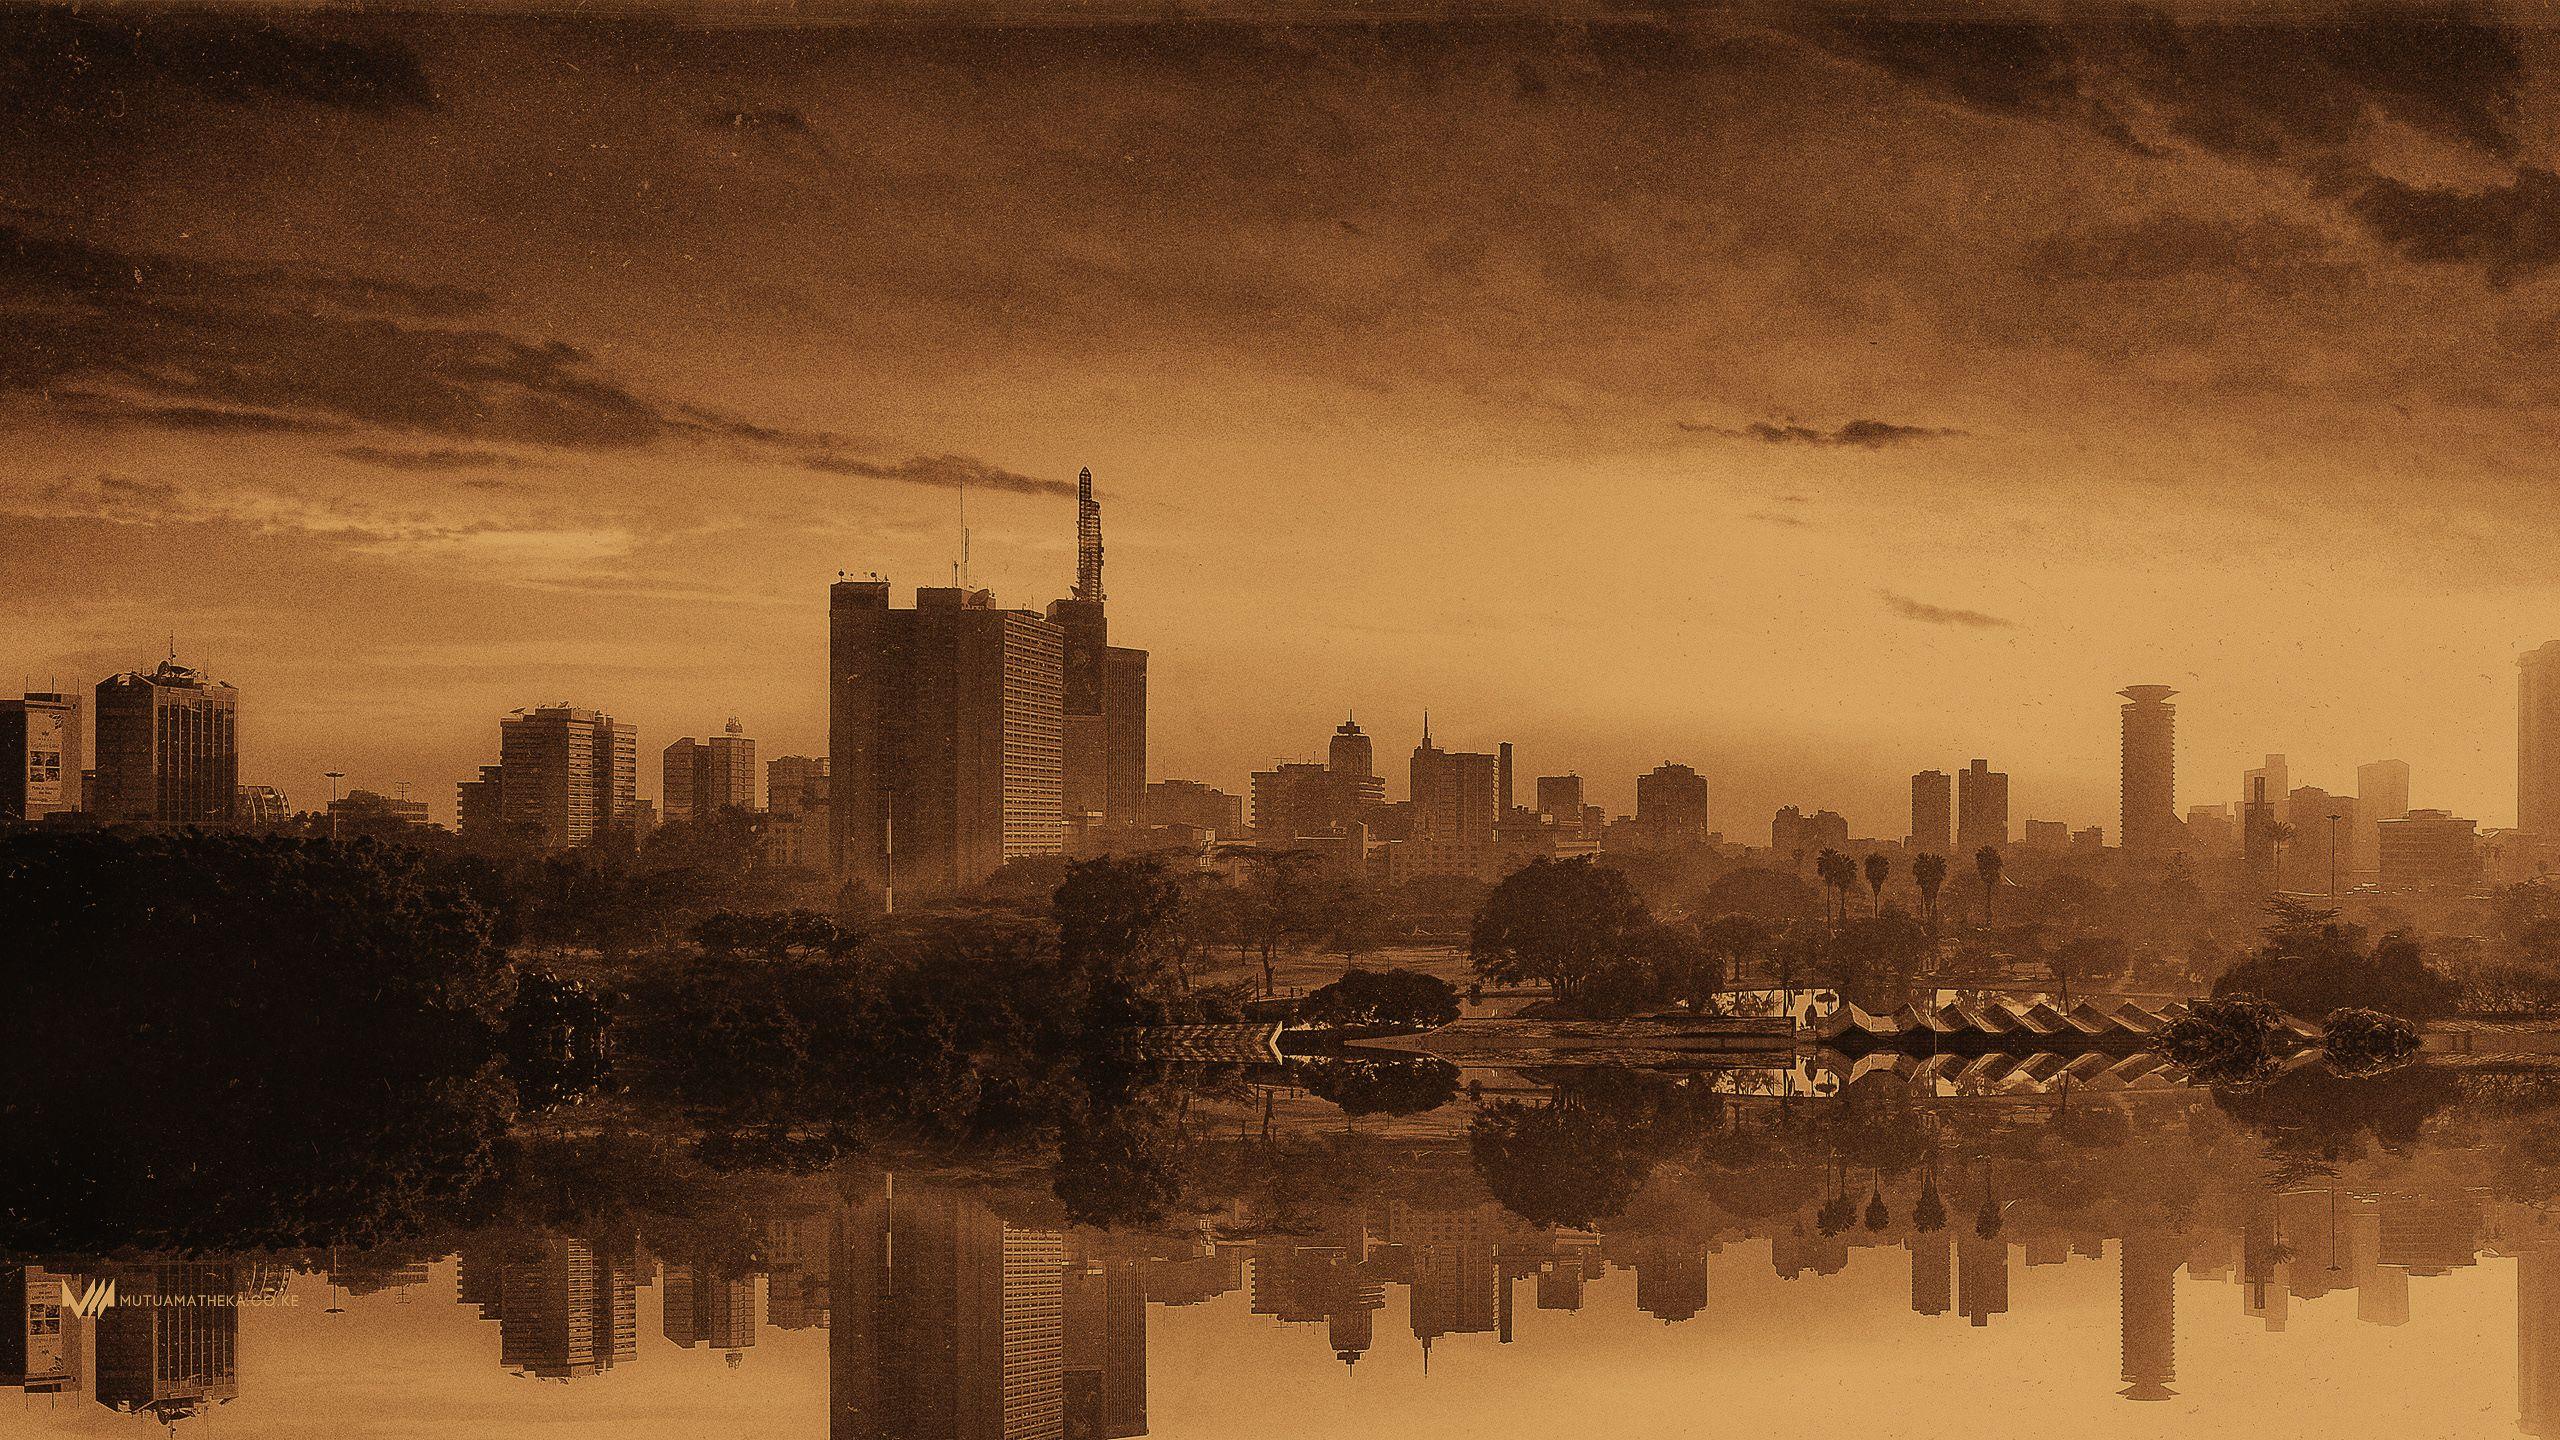 Wallpapers Monday – Nairobi!!